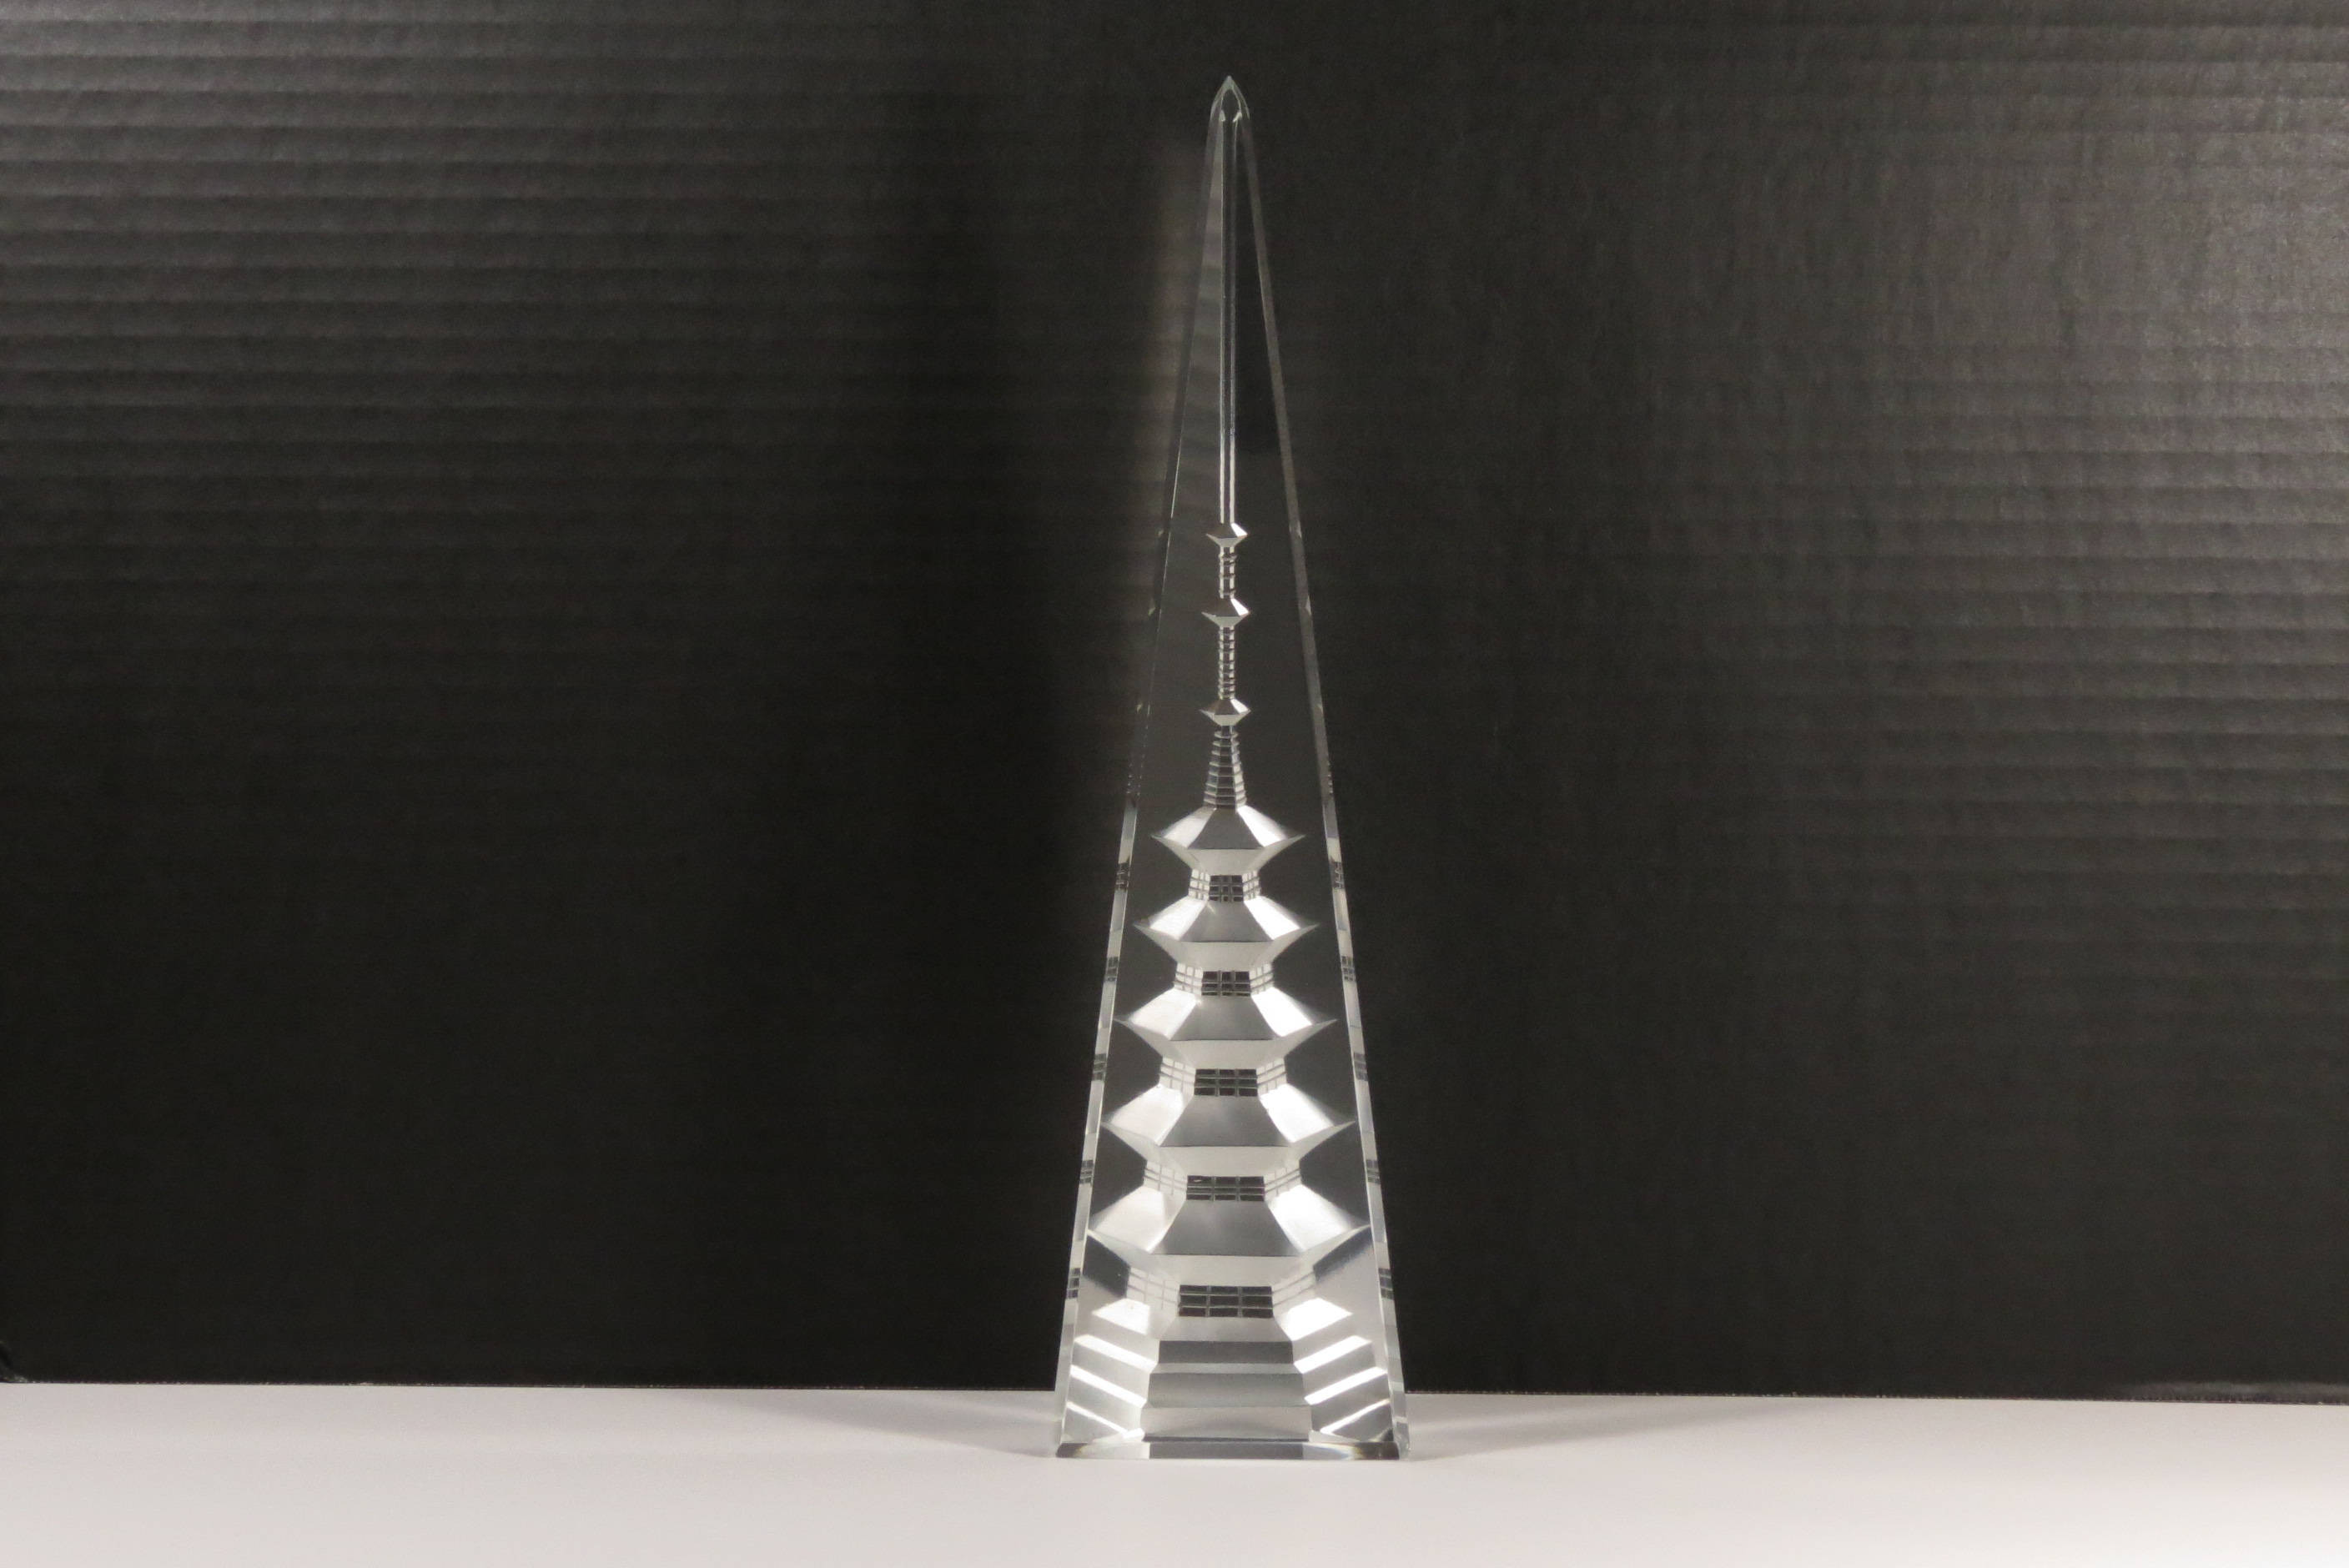 28 Spectacular Lead Crystal Cut Glass Vase 2023 free download lead crystal cut glass vase of vintage hoya lead crystal reverse cut art glass pagoda steeple etsy within dc29fc294c28epowiac299ksz